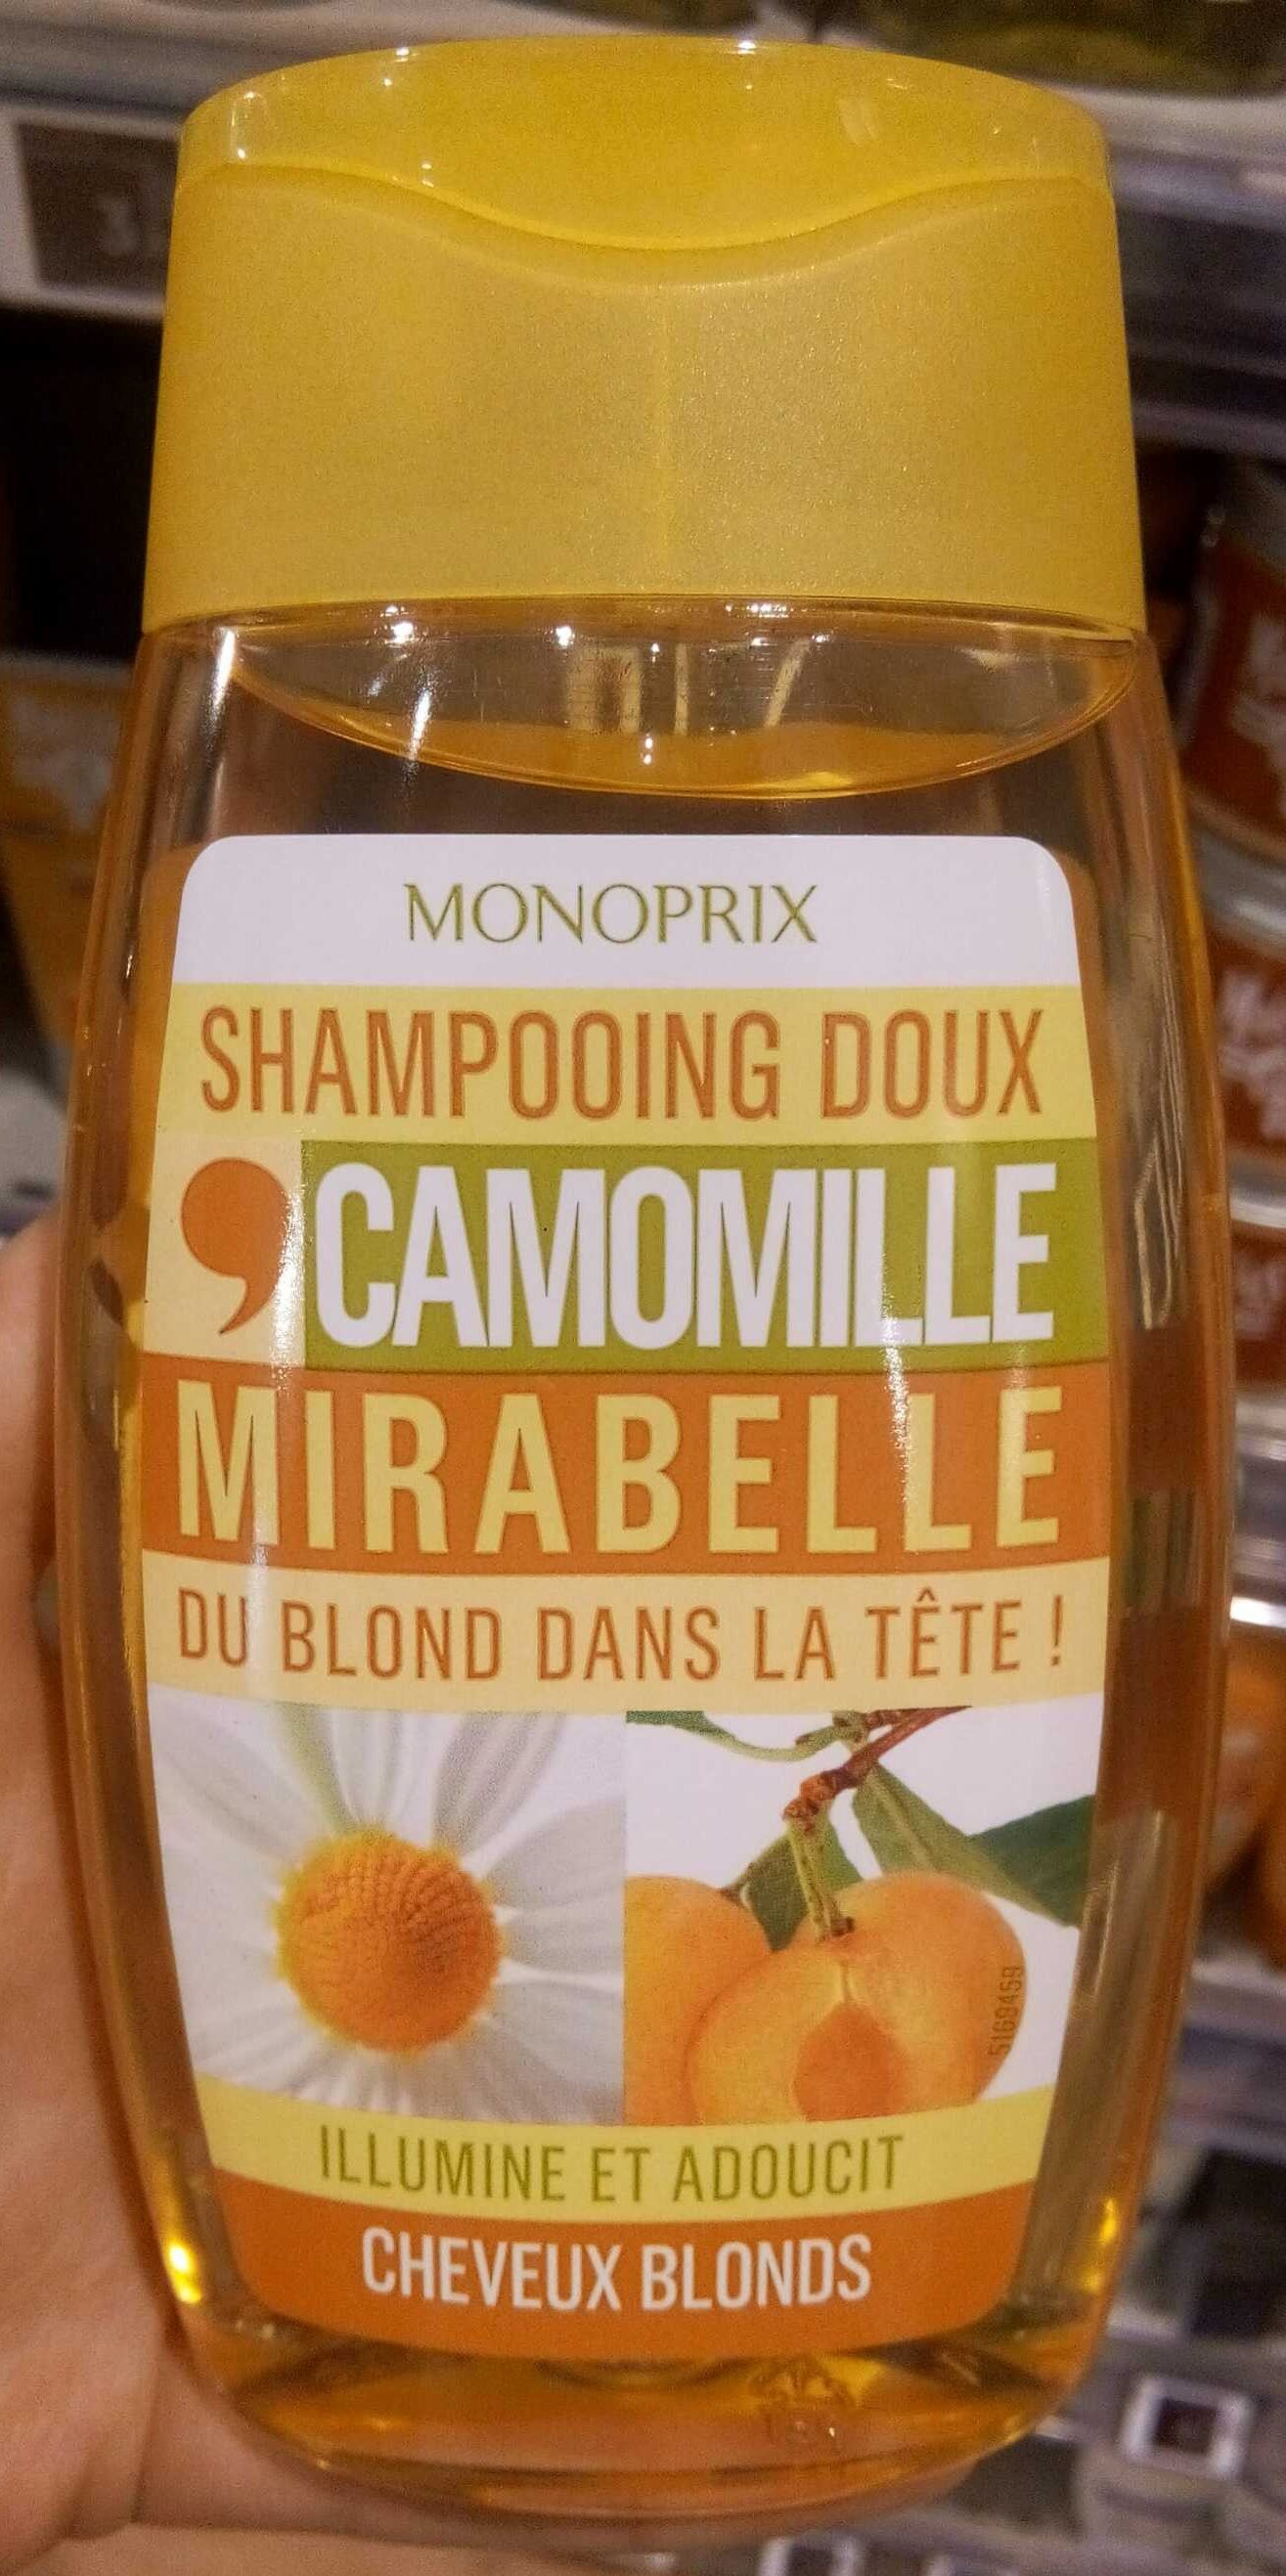 Shampooing doux camomille mirabelle - Produit - fr